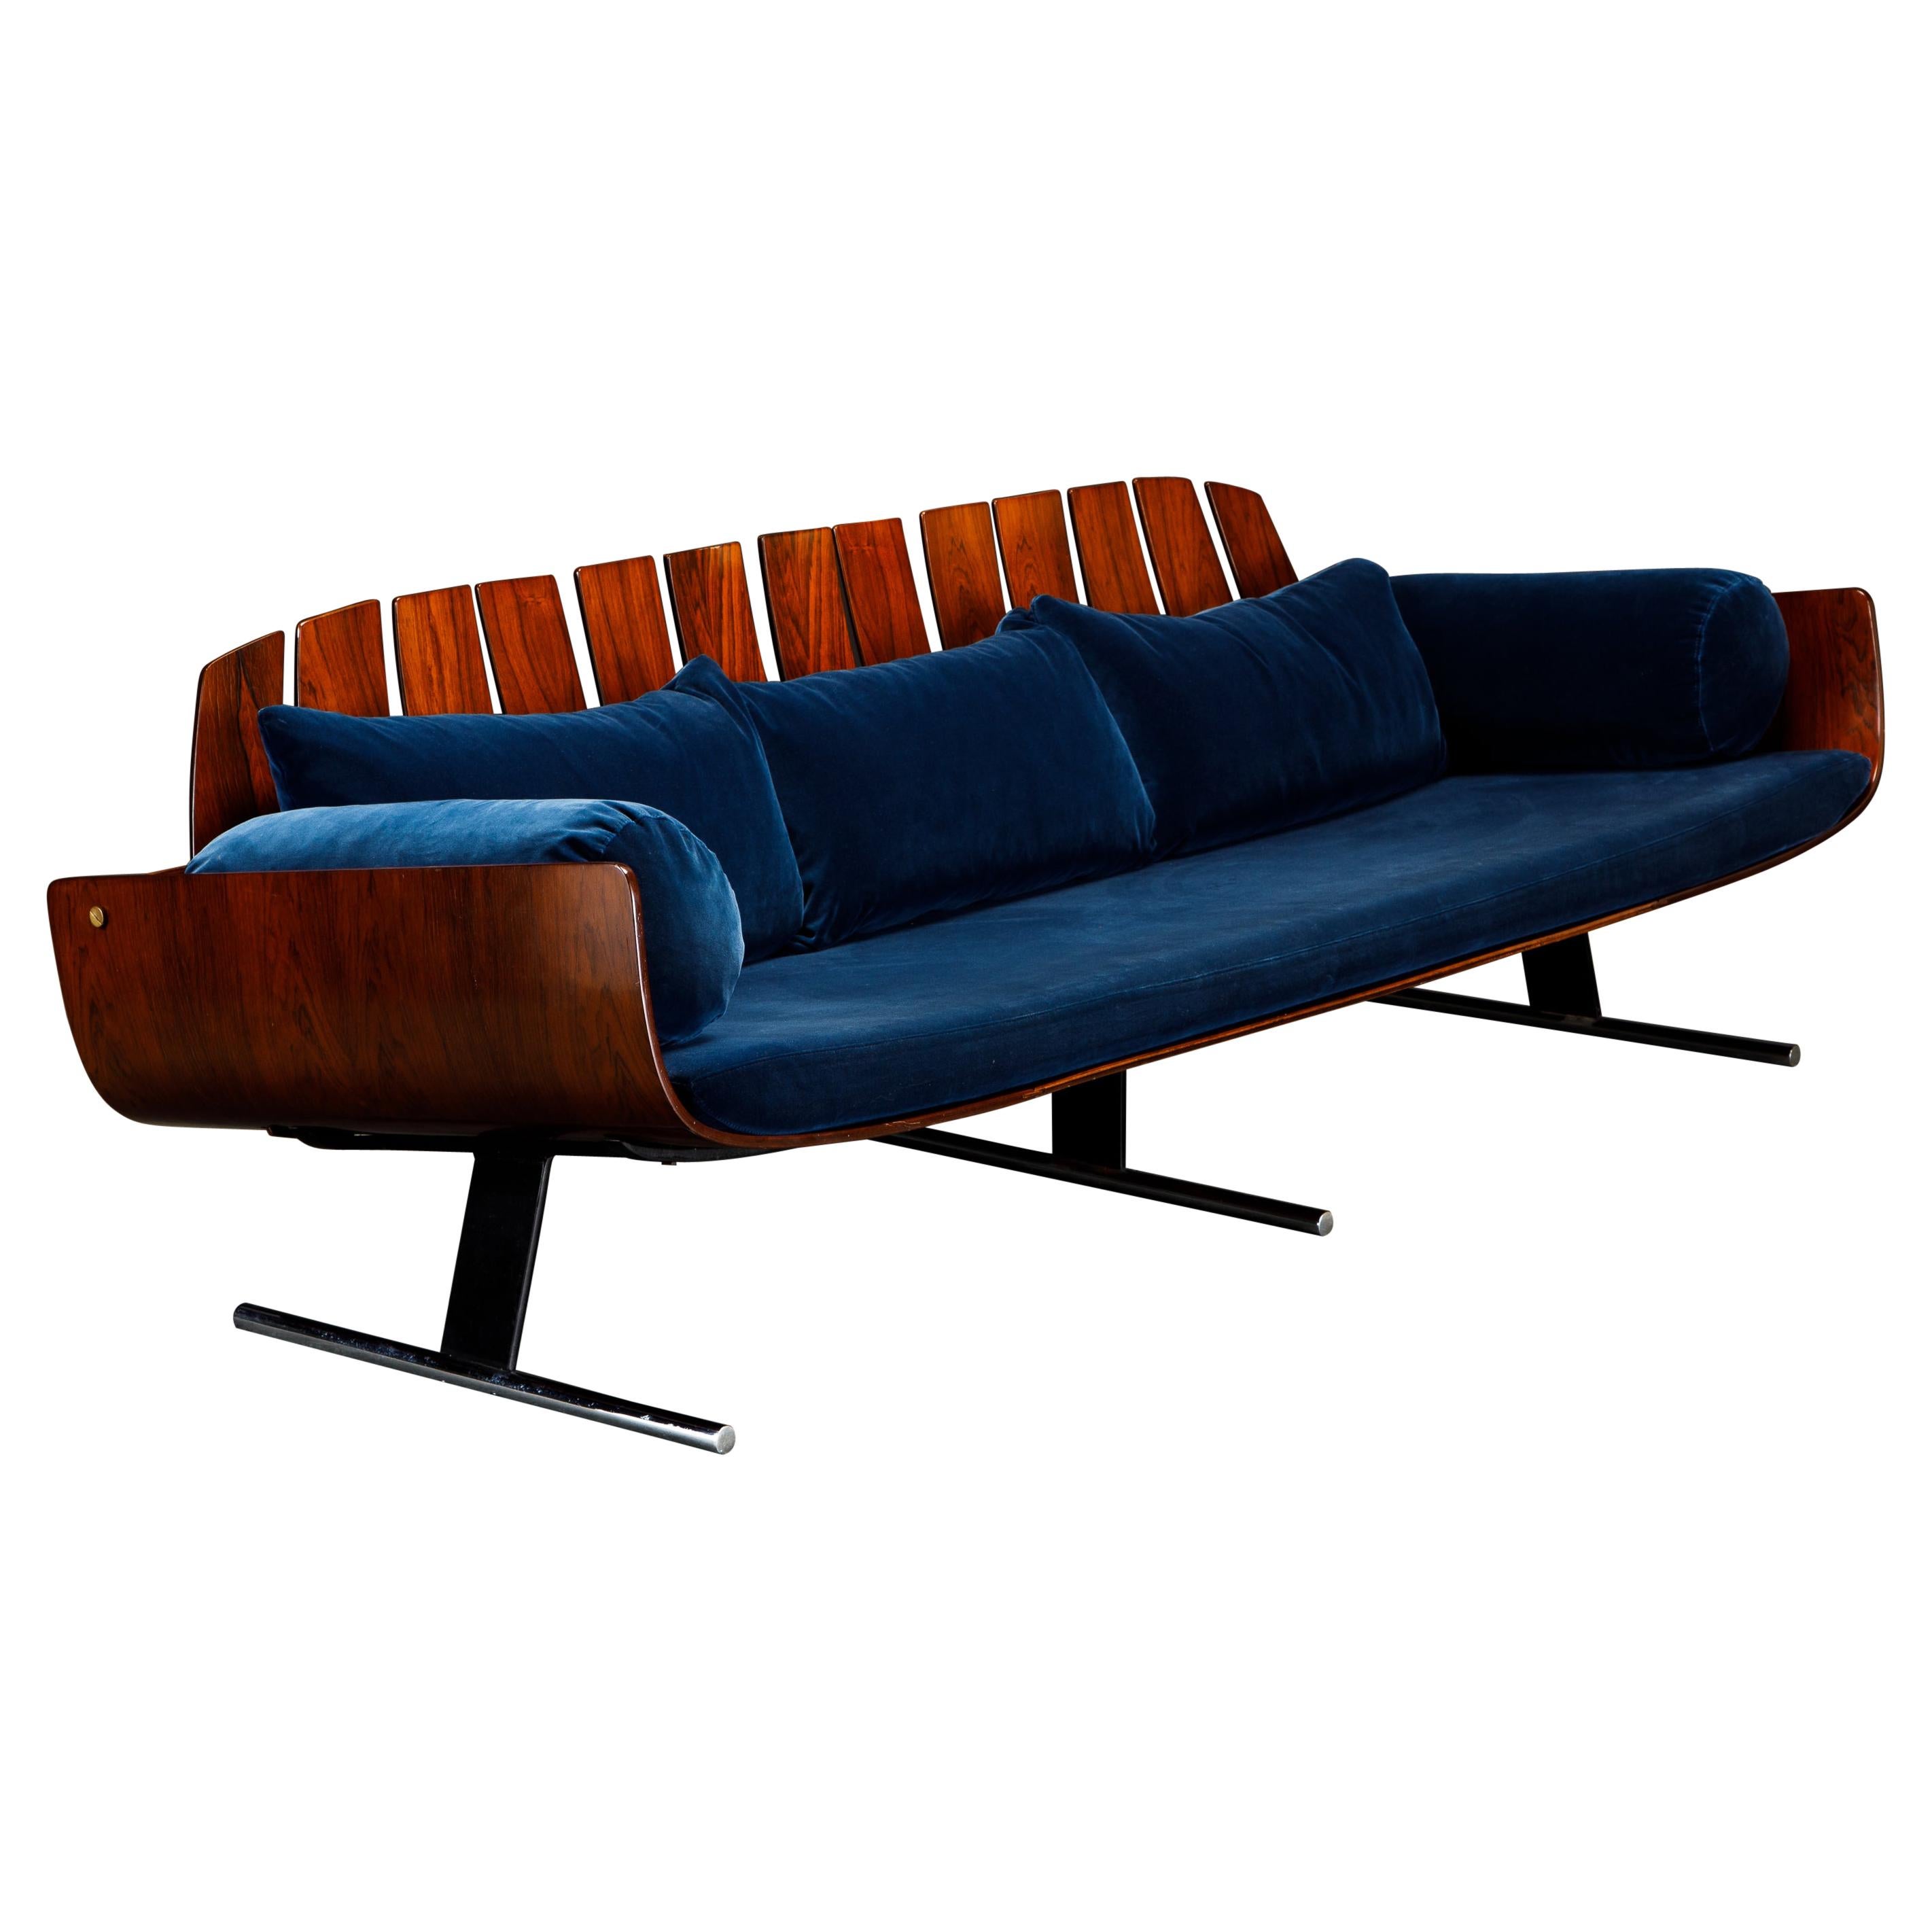 'Presidencial' Sofa by Jorge Zalszupin for L'Atelier Brazil, c. 1960, Signed